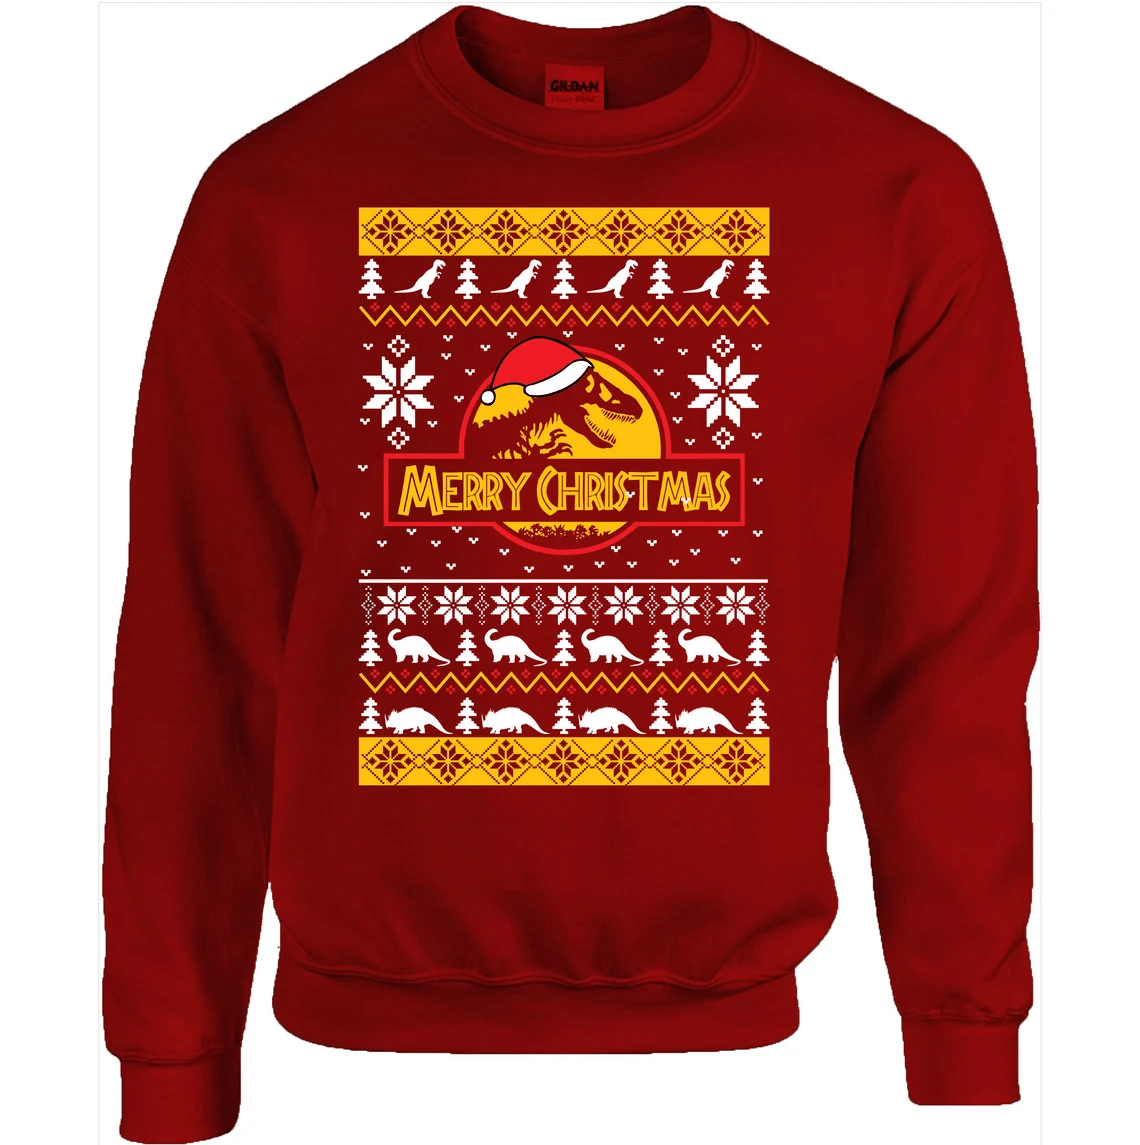 The World of Dinosaur Park Merry Christmas Sweatshirt Style: Sweatshirt, Color: Red